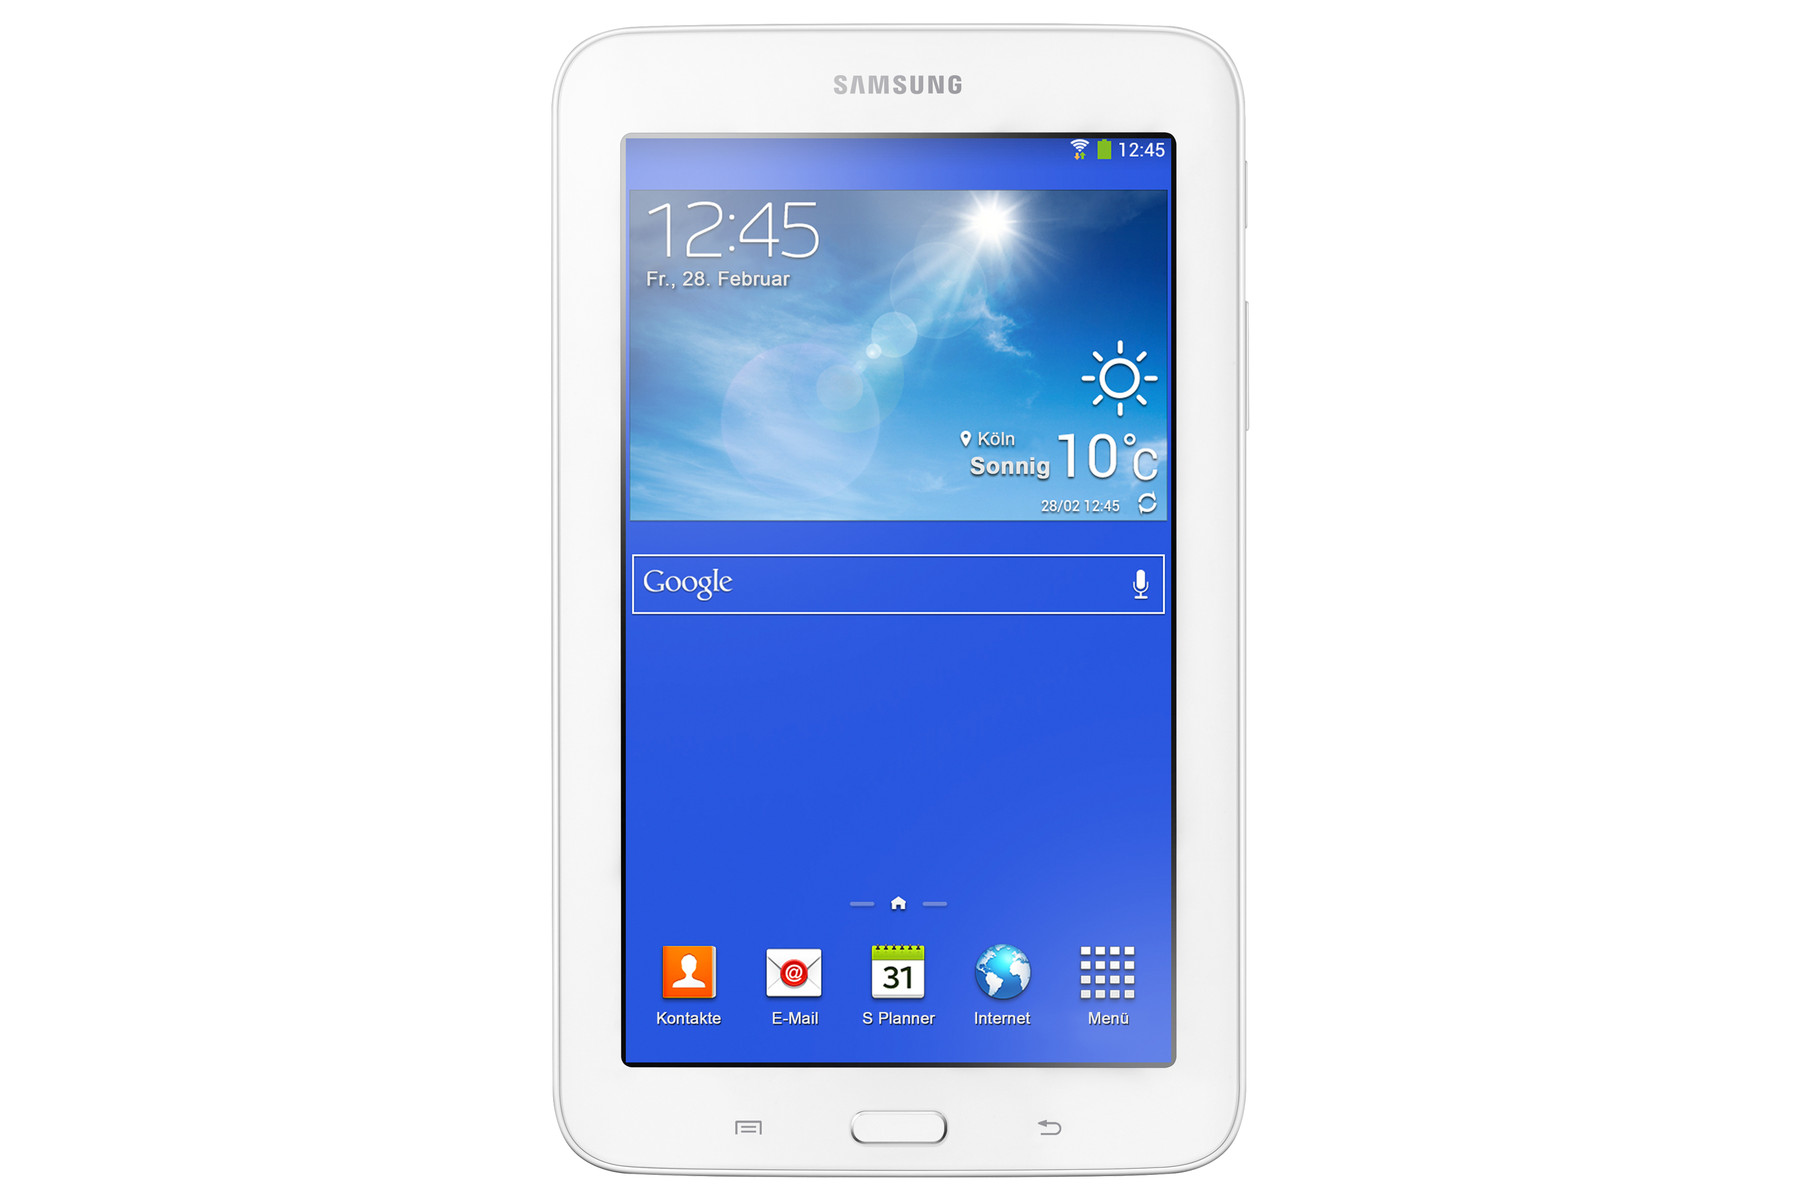 Samsung Galaxy Tab Lite